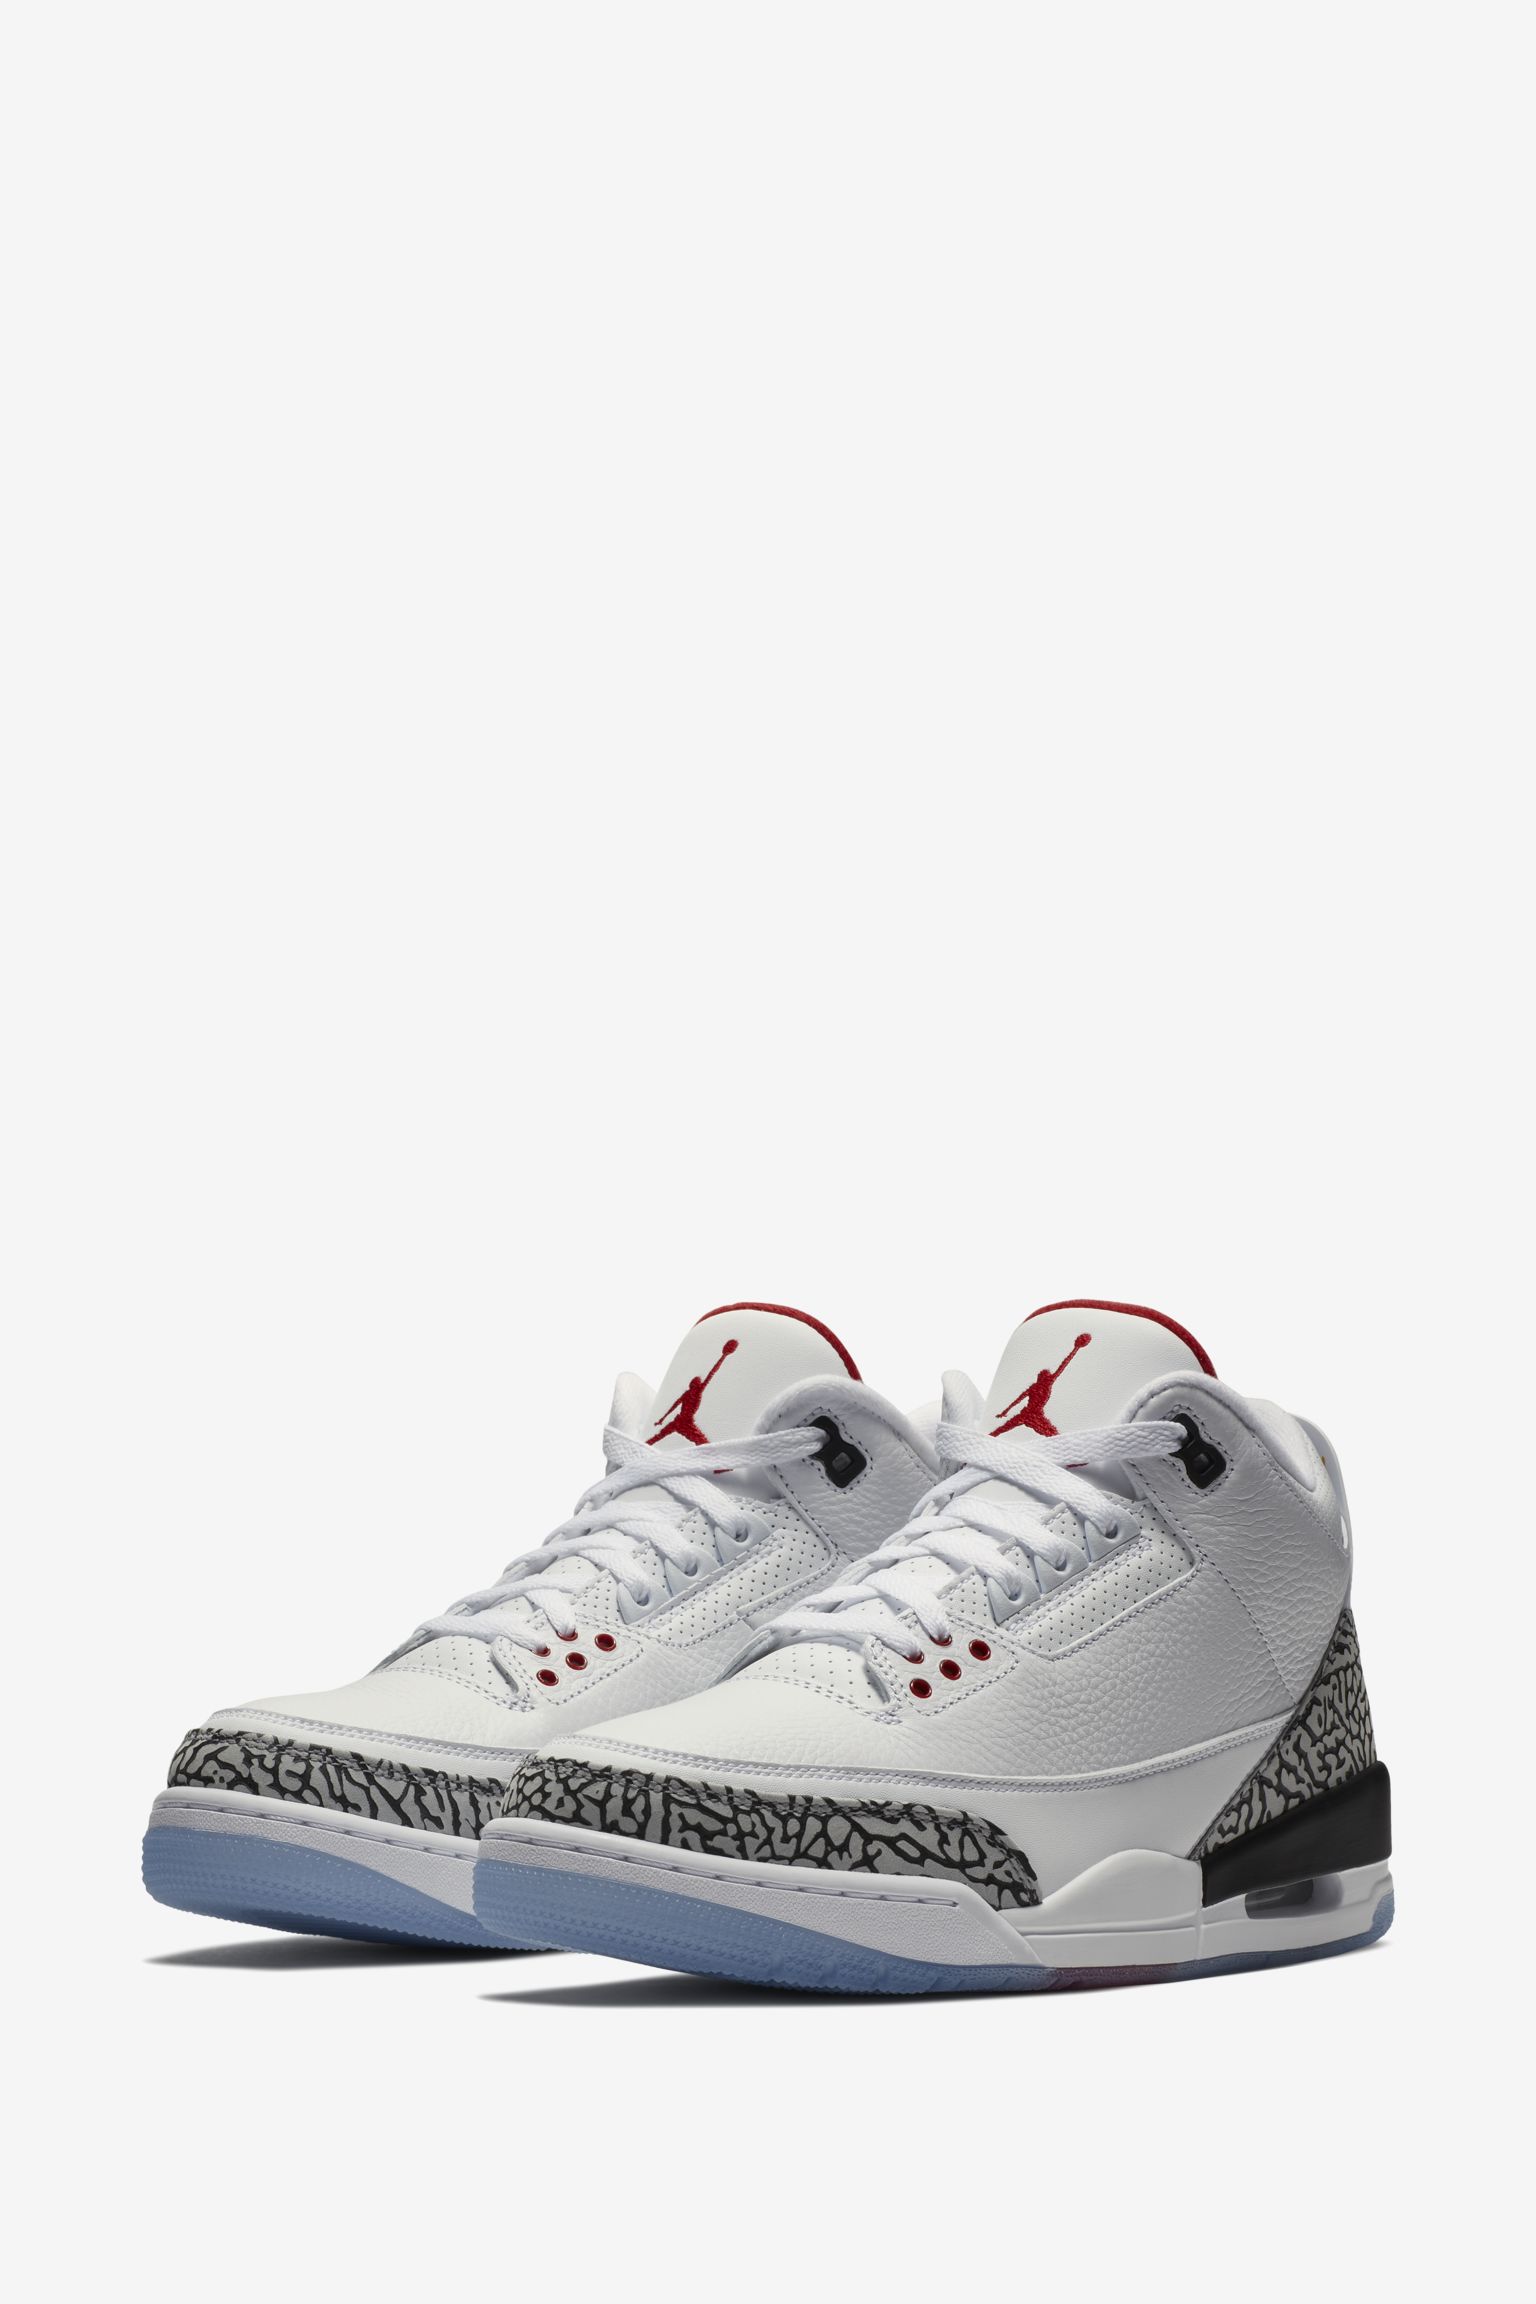 Air Jordan 3 'Free Throw Line' Release Date. Nike SNKRS US